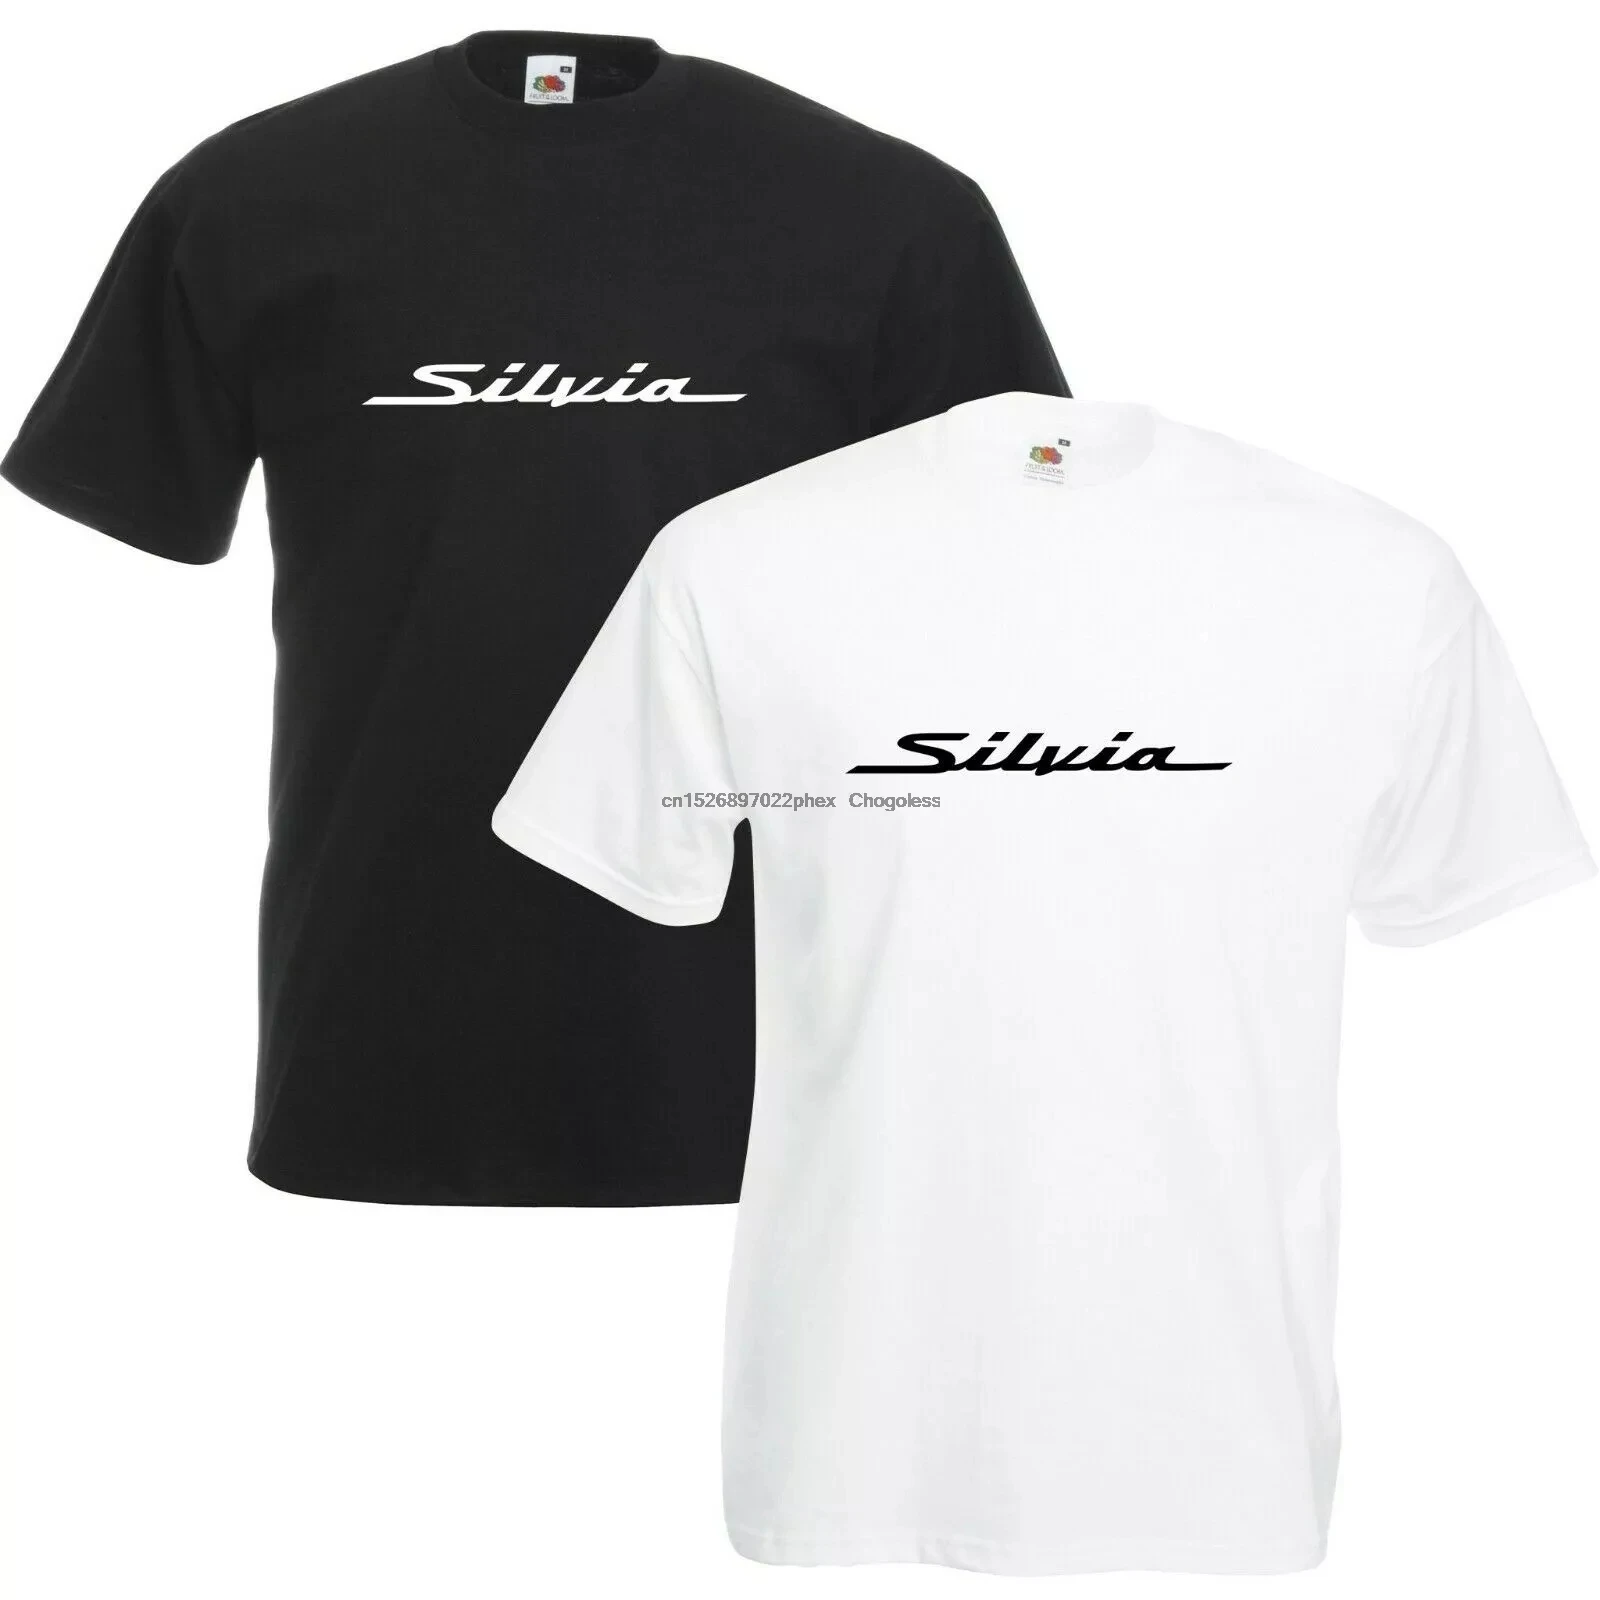 Nissan Silvia T Shirt Car Enthusiast S13 S14 S15 VARIOUS SIZES COLOURS